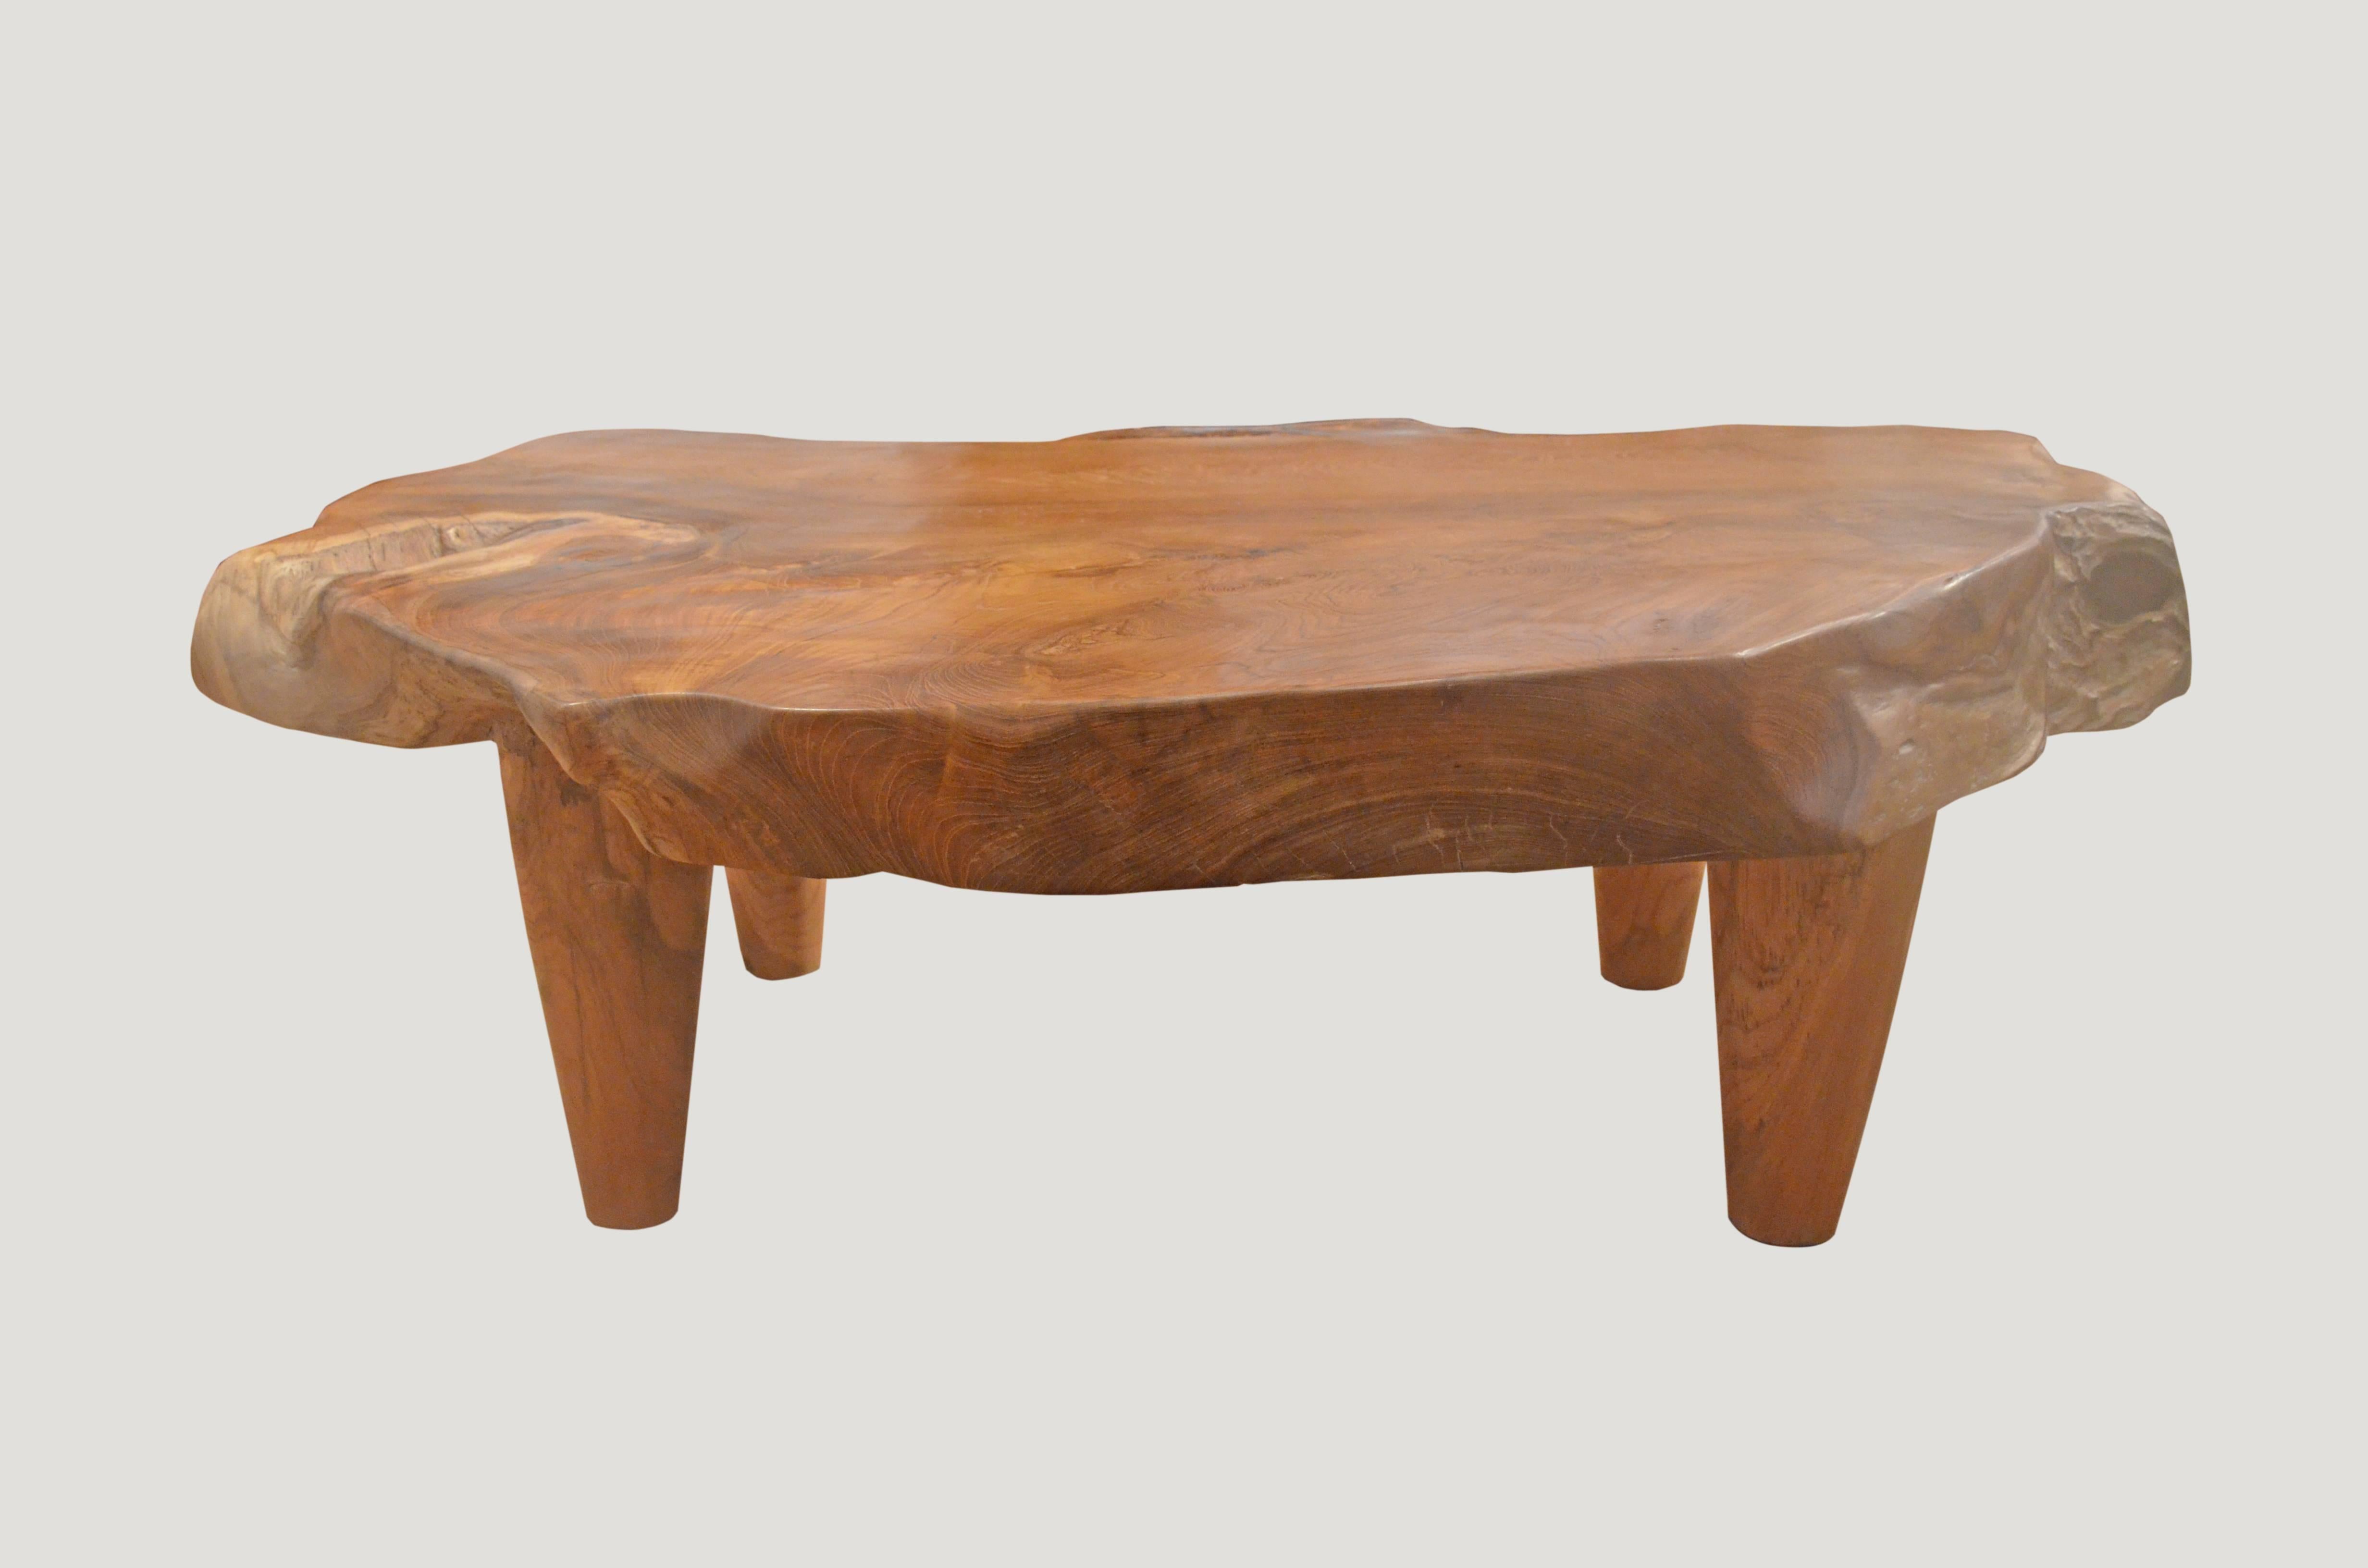 Impressive single reclaimed teak wood slab coffee table. Set on modern teak legs allowing the top to float.